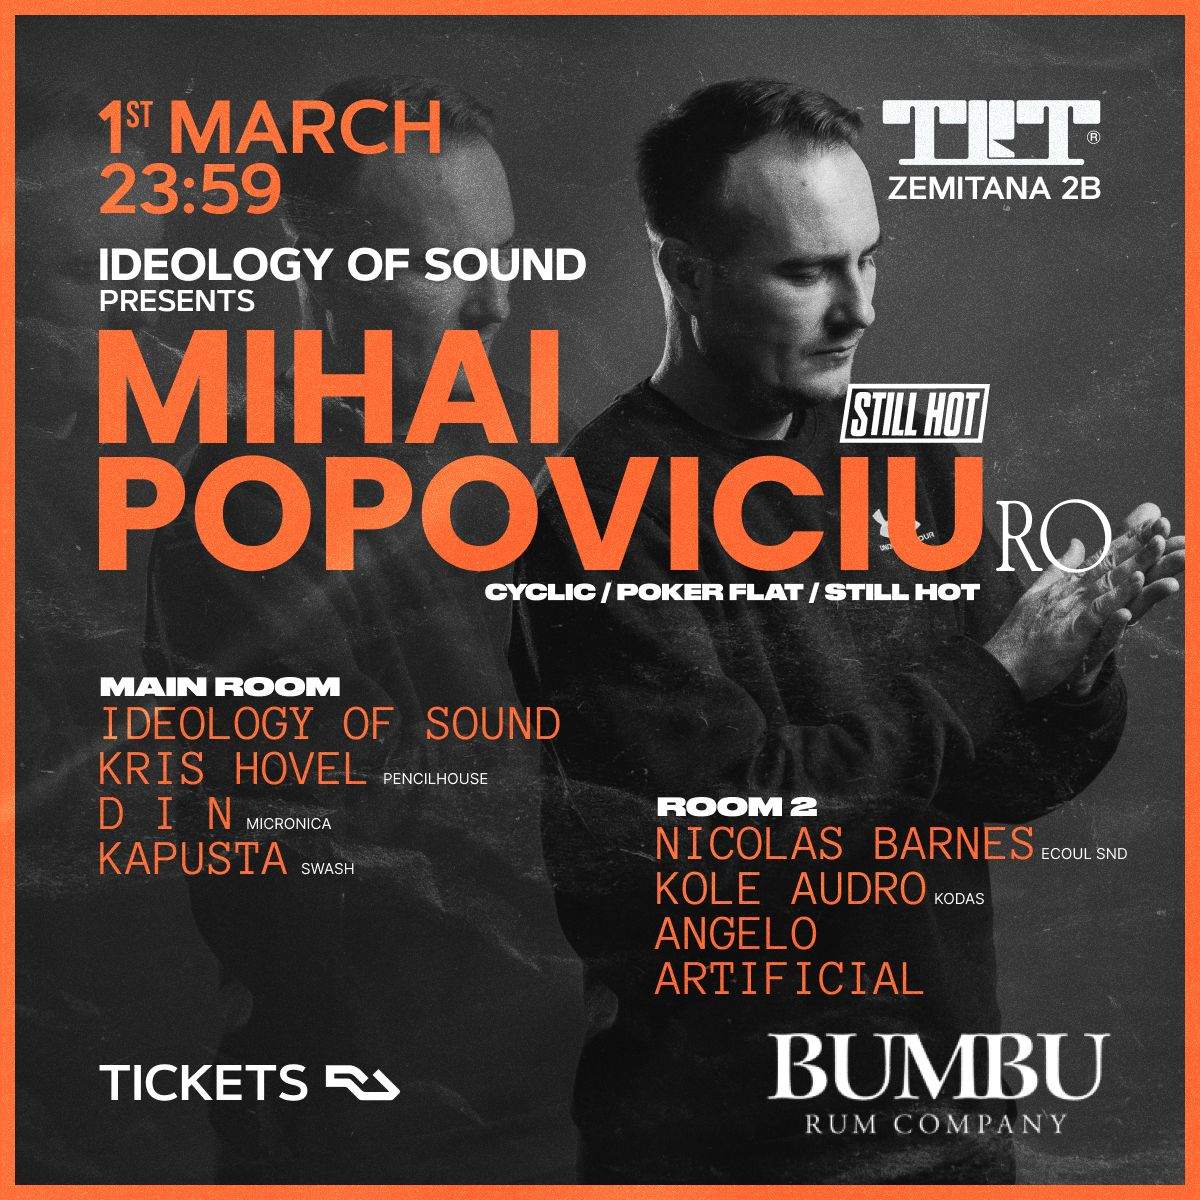 Ideology of Sound presents Mihai Popoviciu - Página trasera